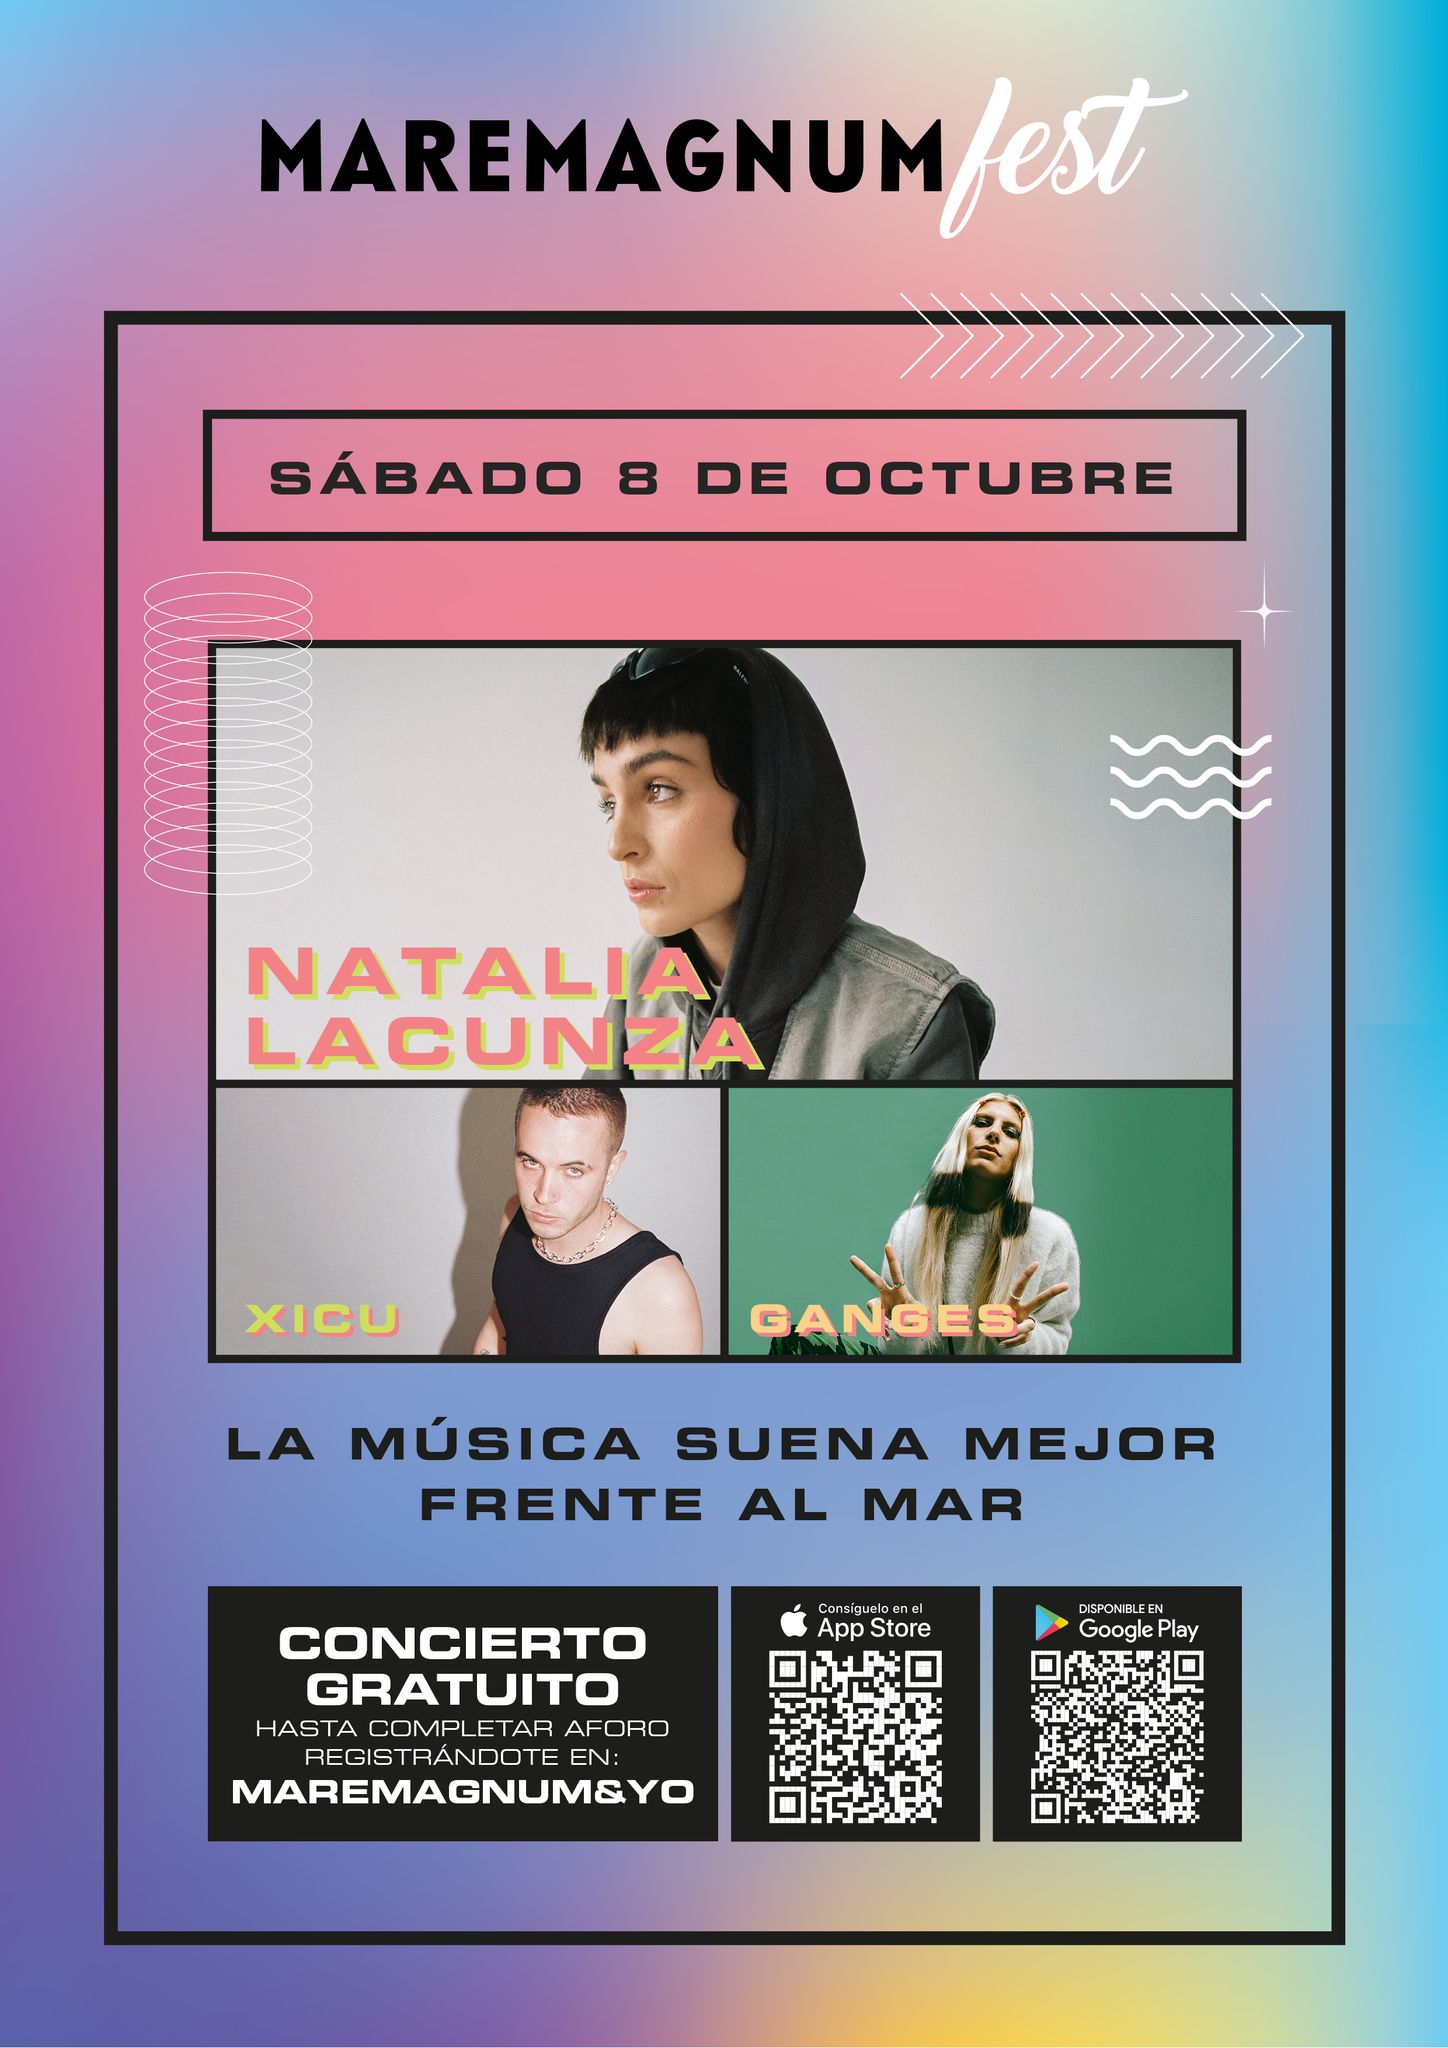 Natalia Lacunza el Maremagnum Fest 2022 8 de octubre - Good2b lifestyle Barcelona Madrid